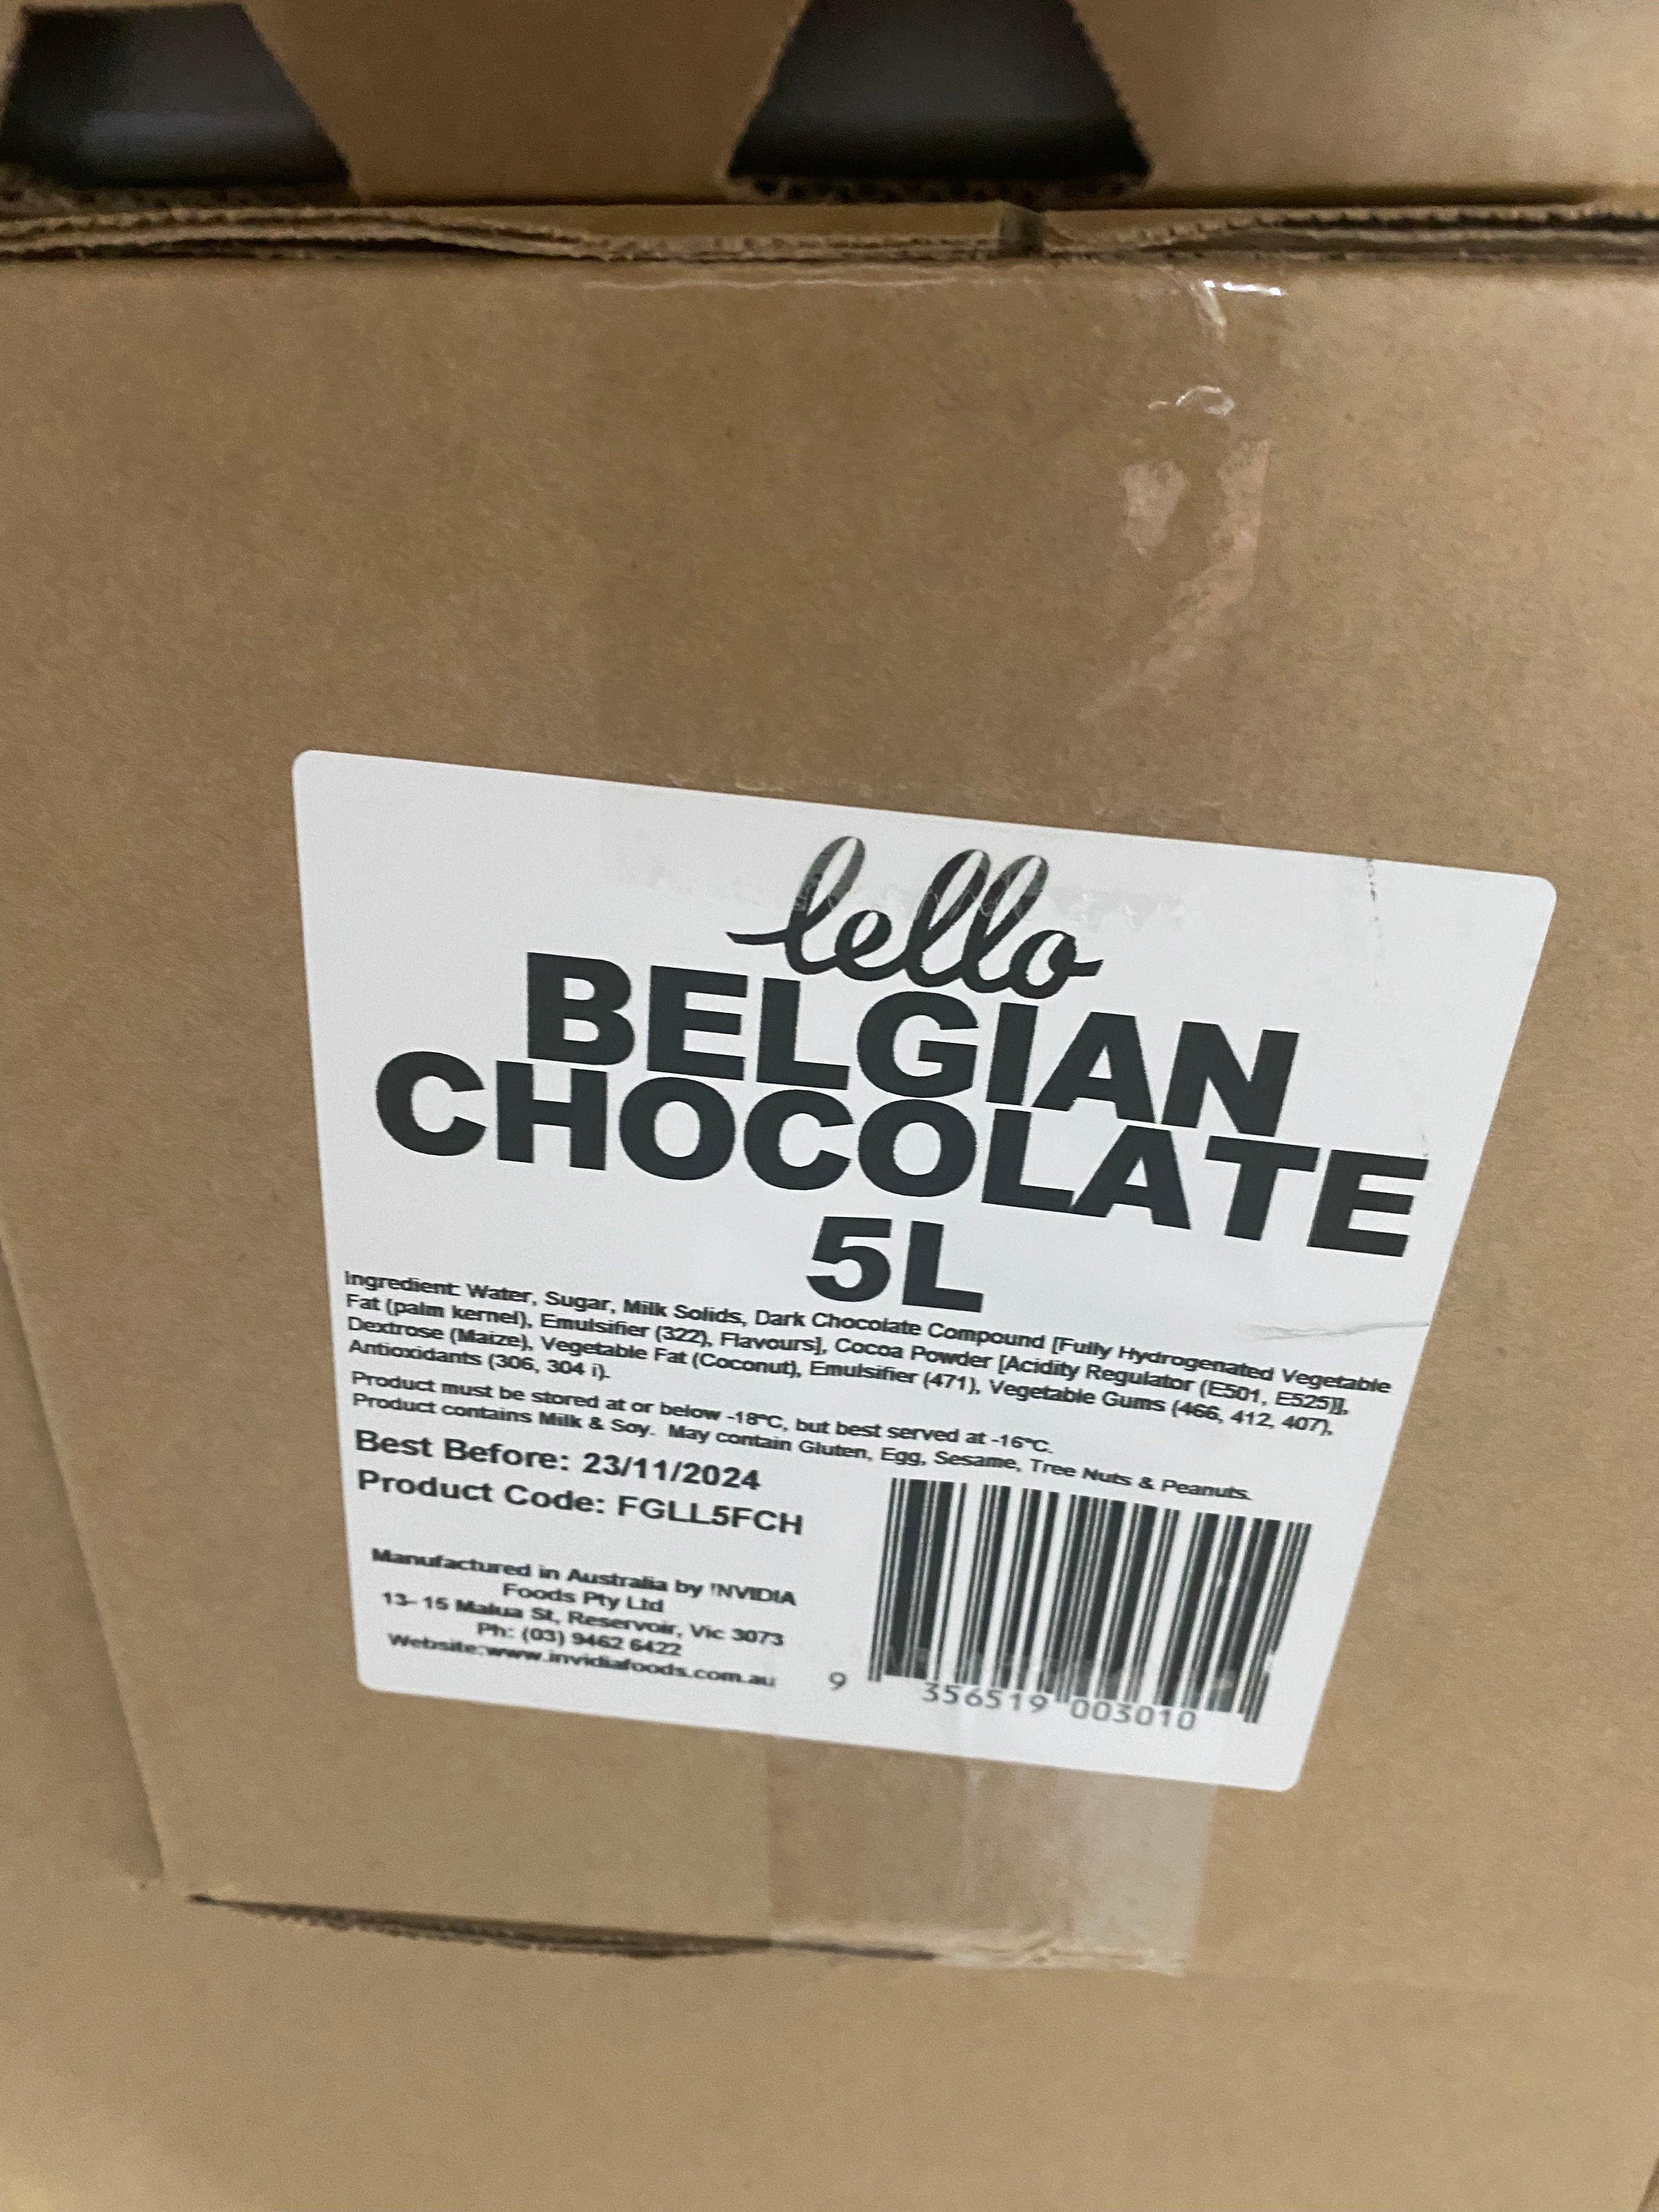 5L Gelato - Chocolate Belgian